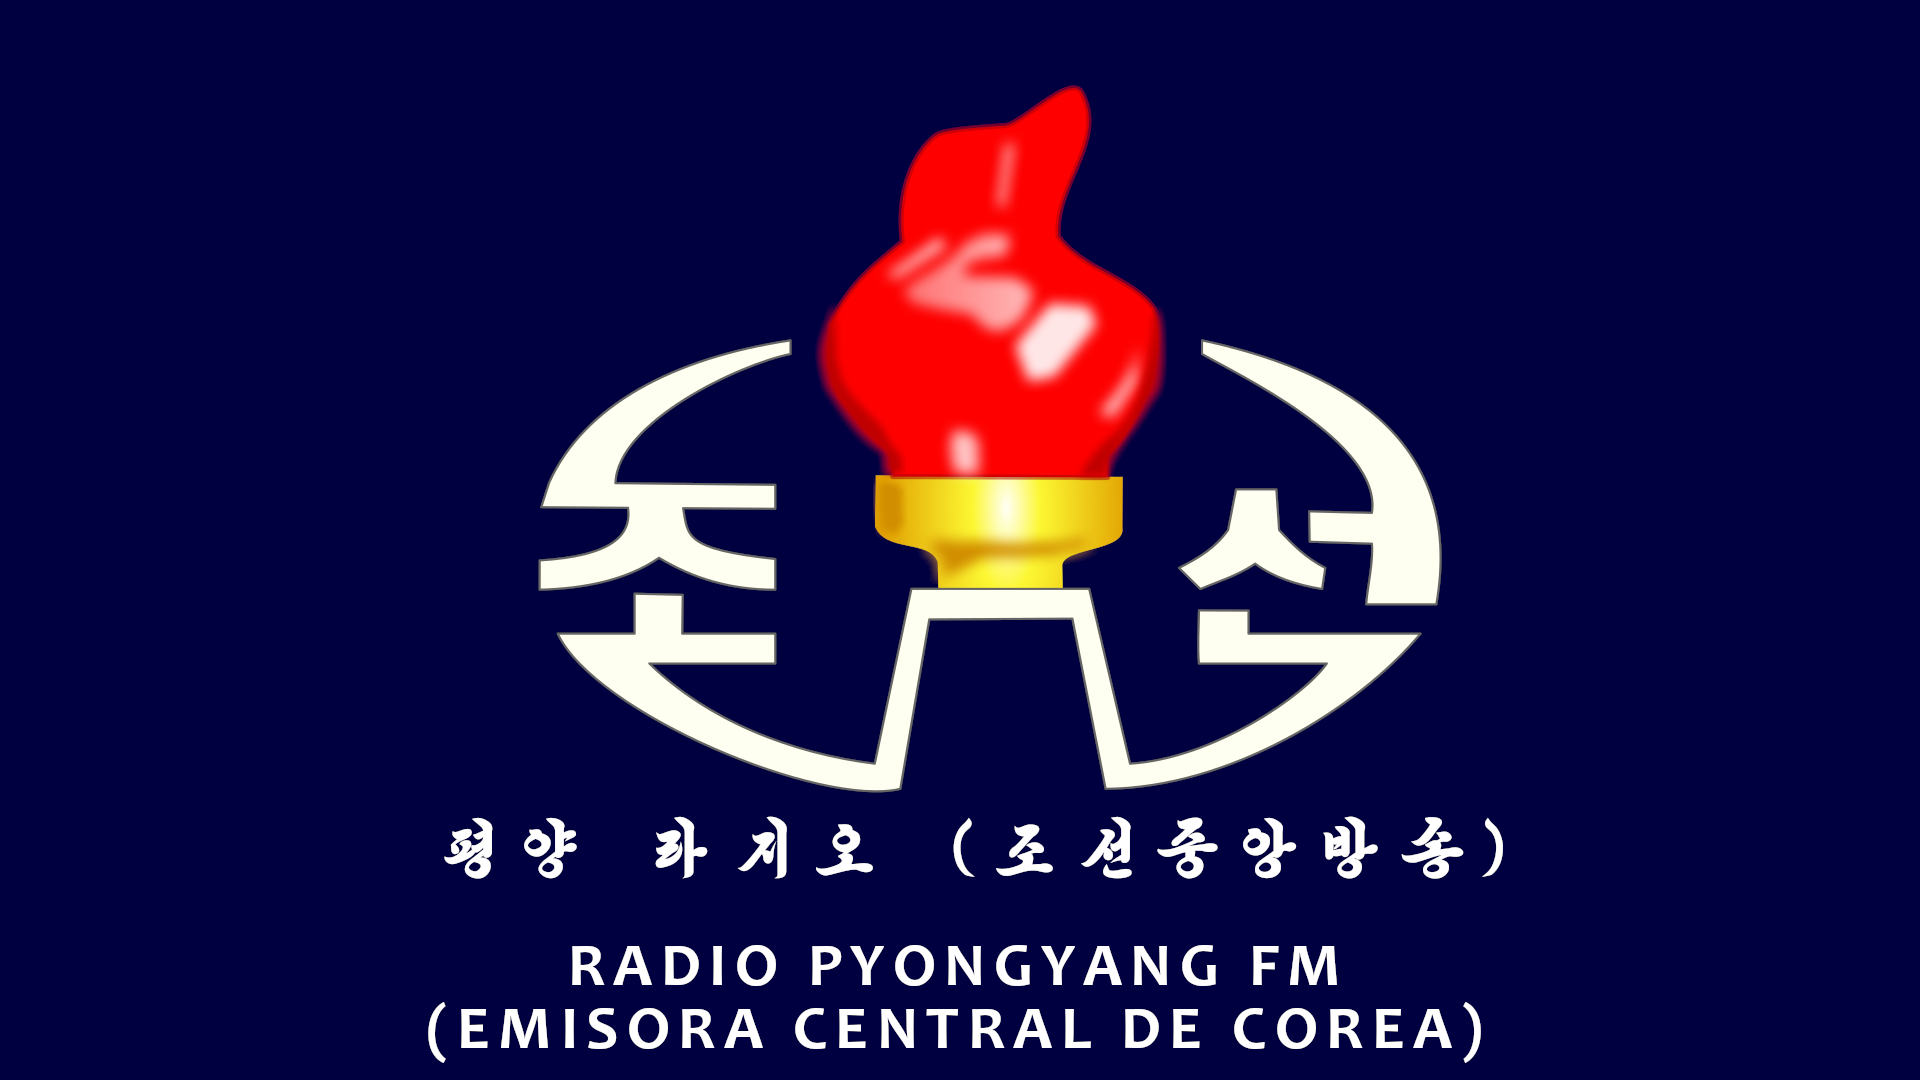 Pyongyang Radio FM